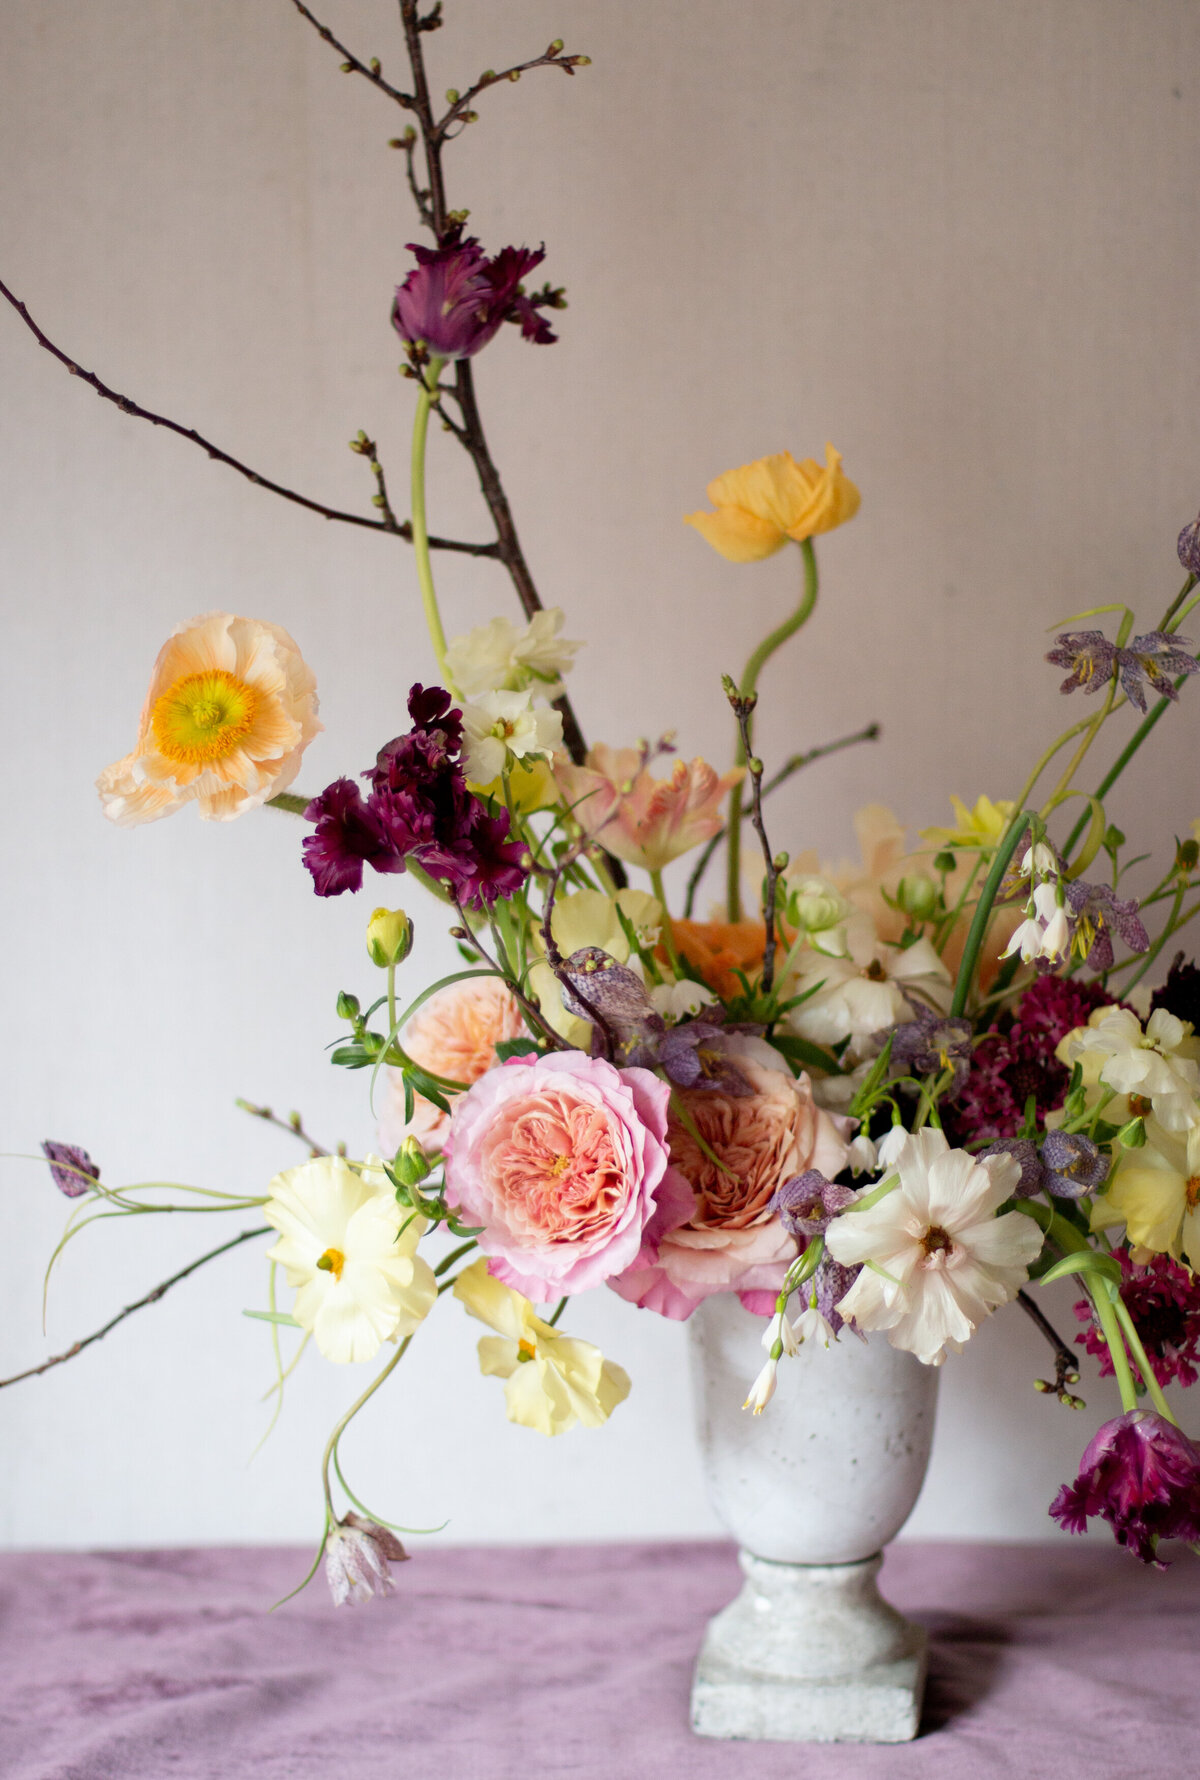 Atelier-Carmel-Wedding-Florist-GALLERY-Arrangements-38